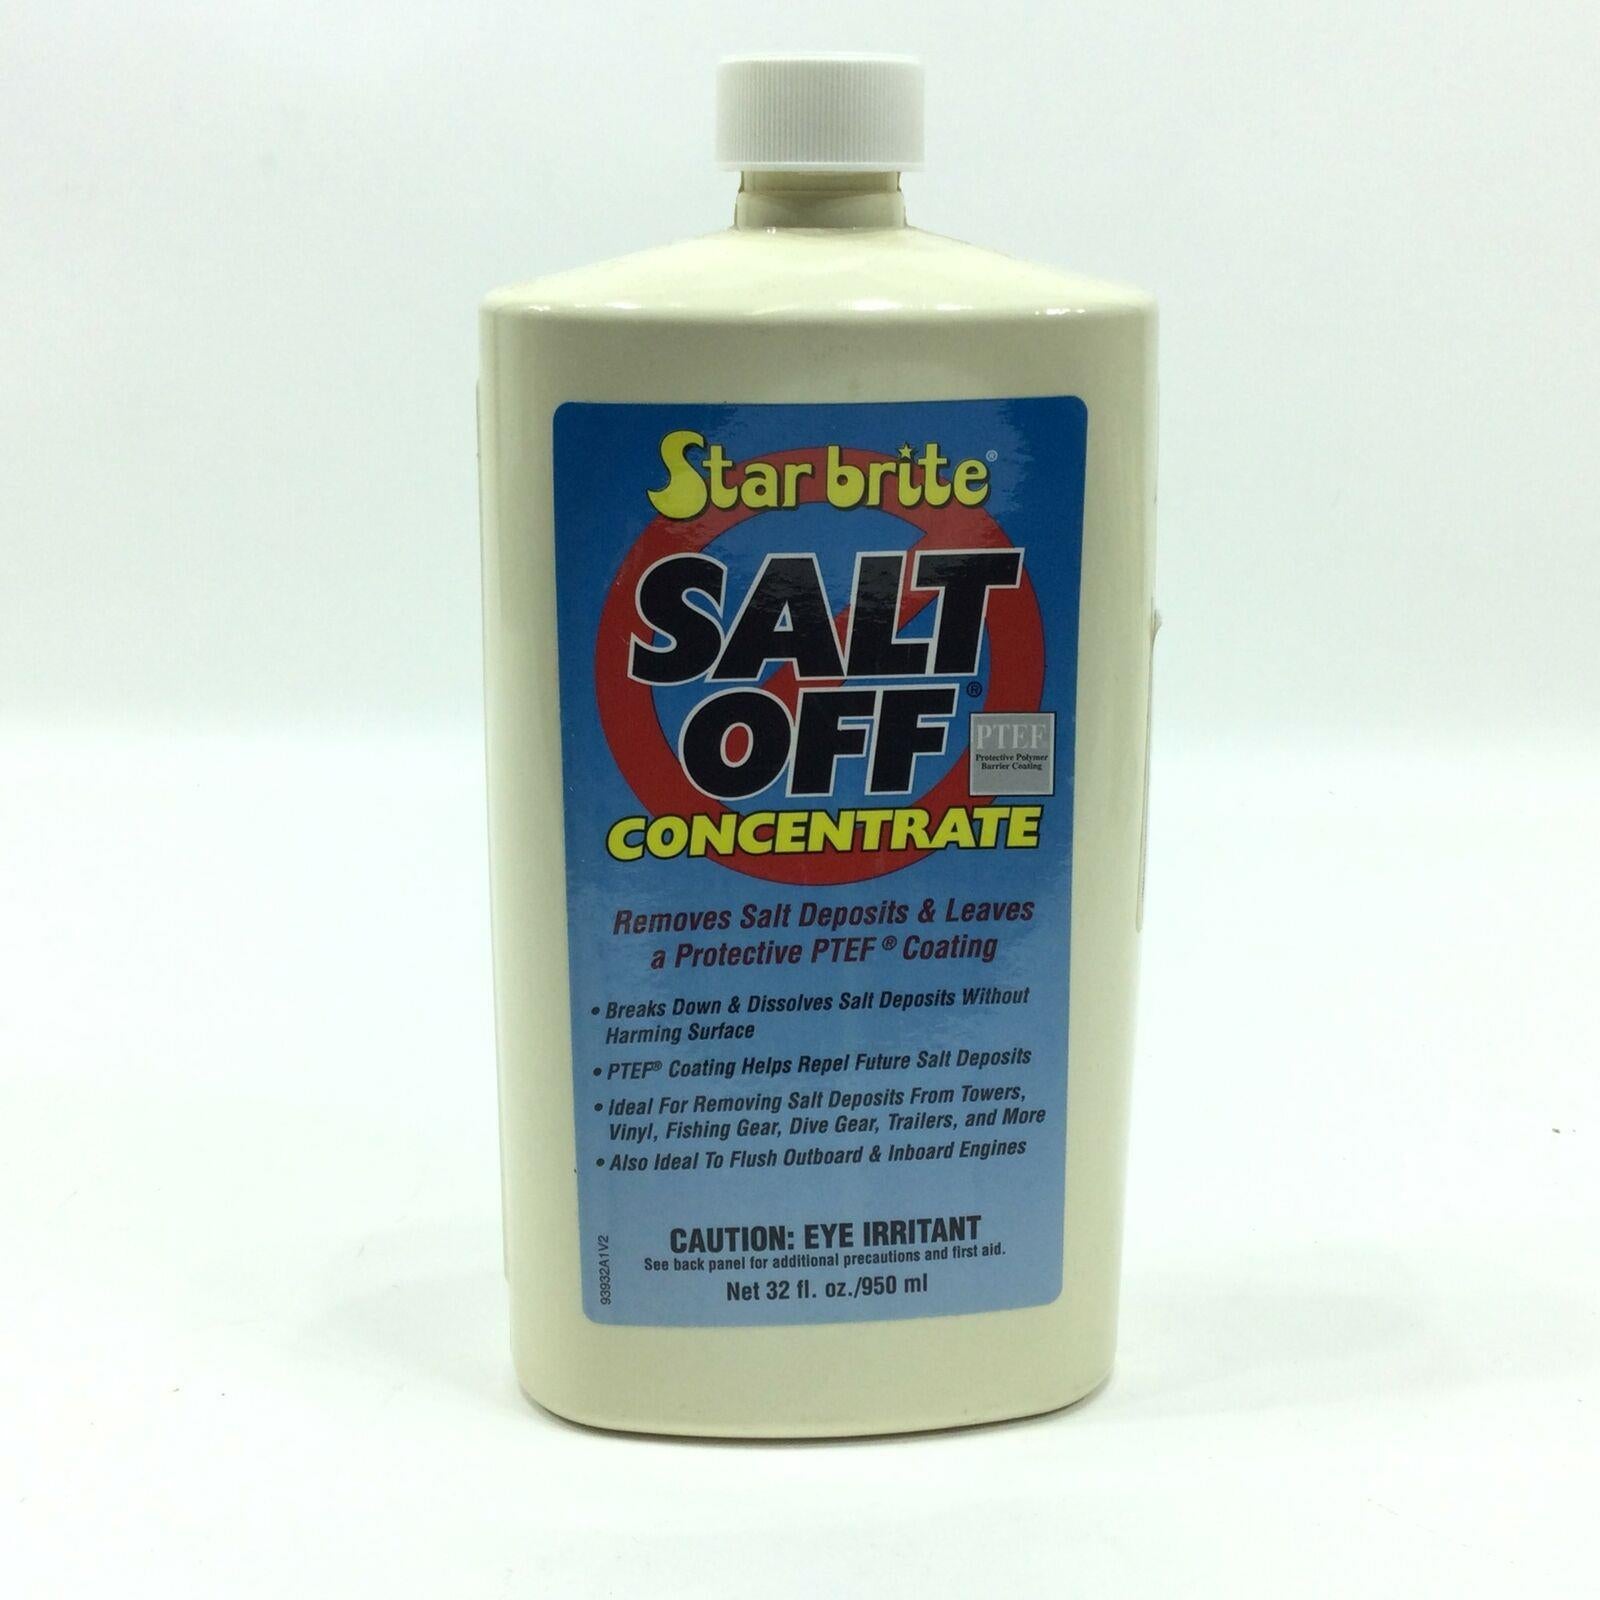 How To REMOVE Salt Deposits With Star Brite Salt Off 